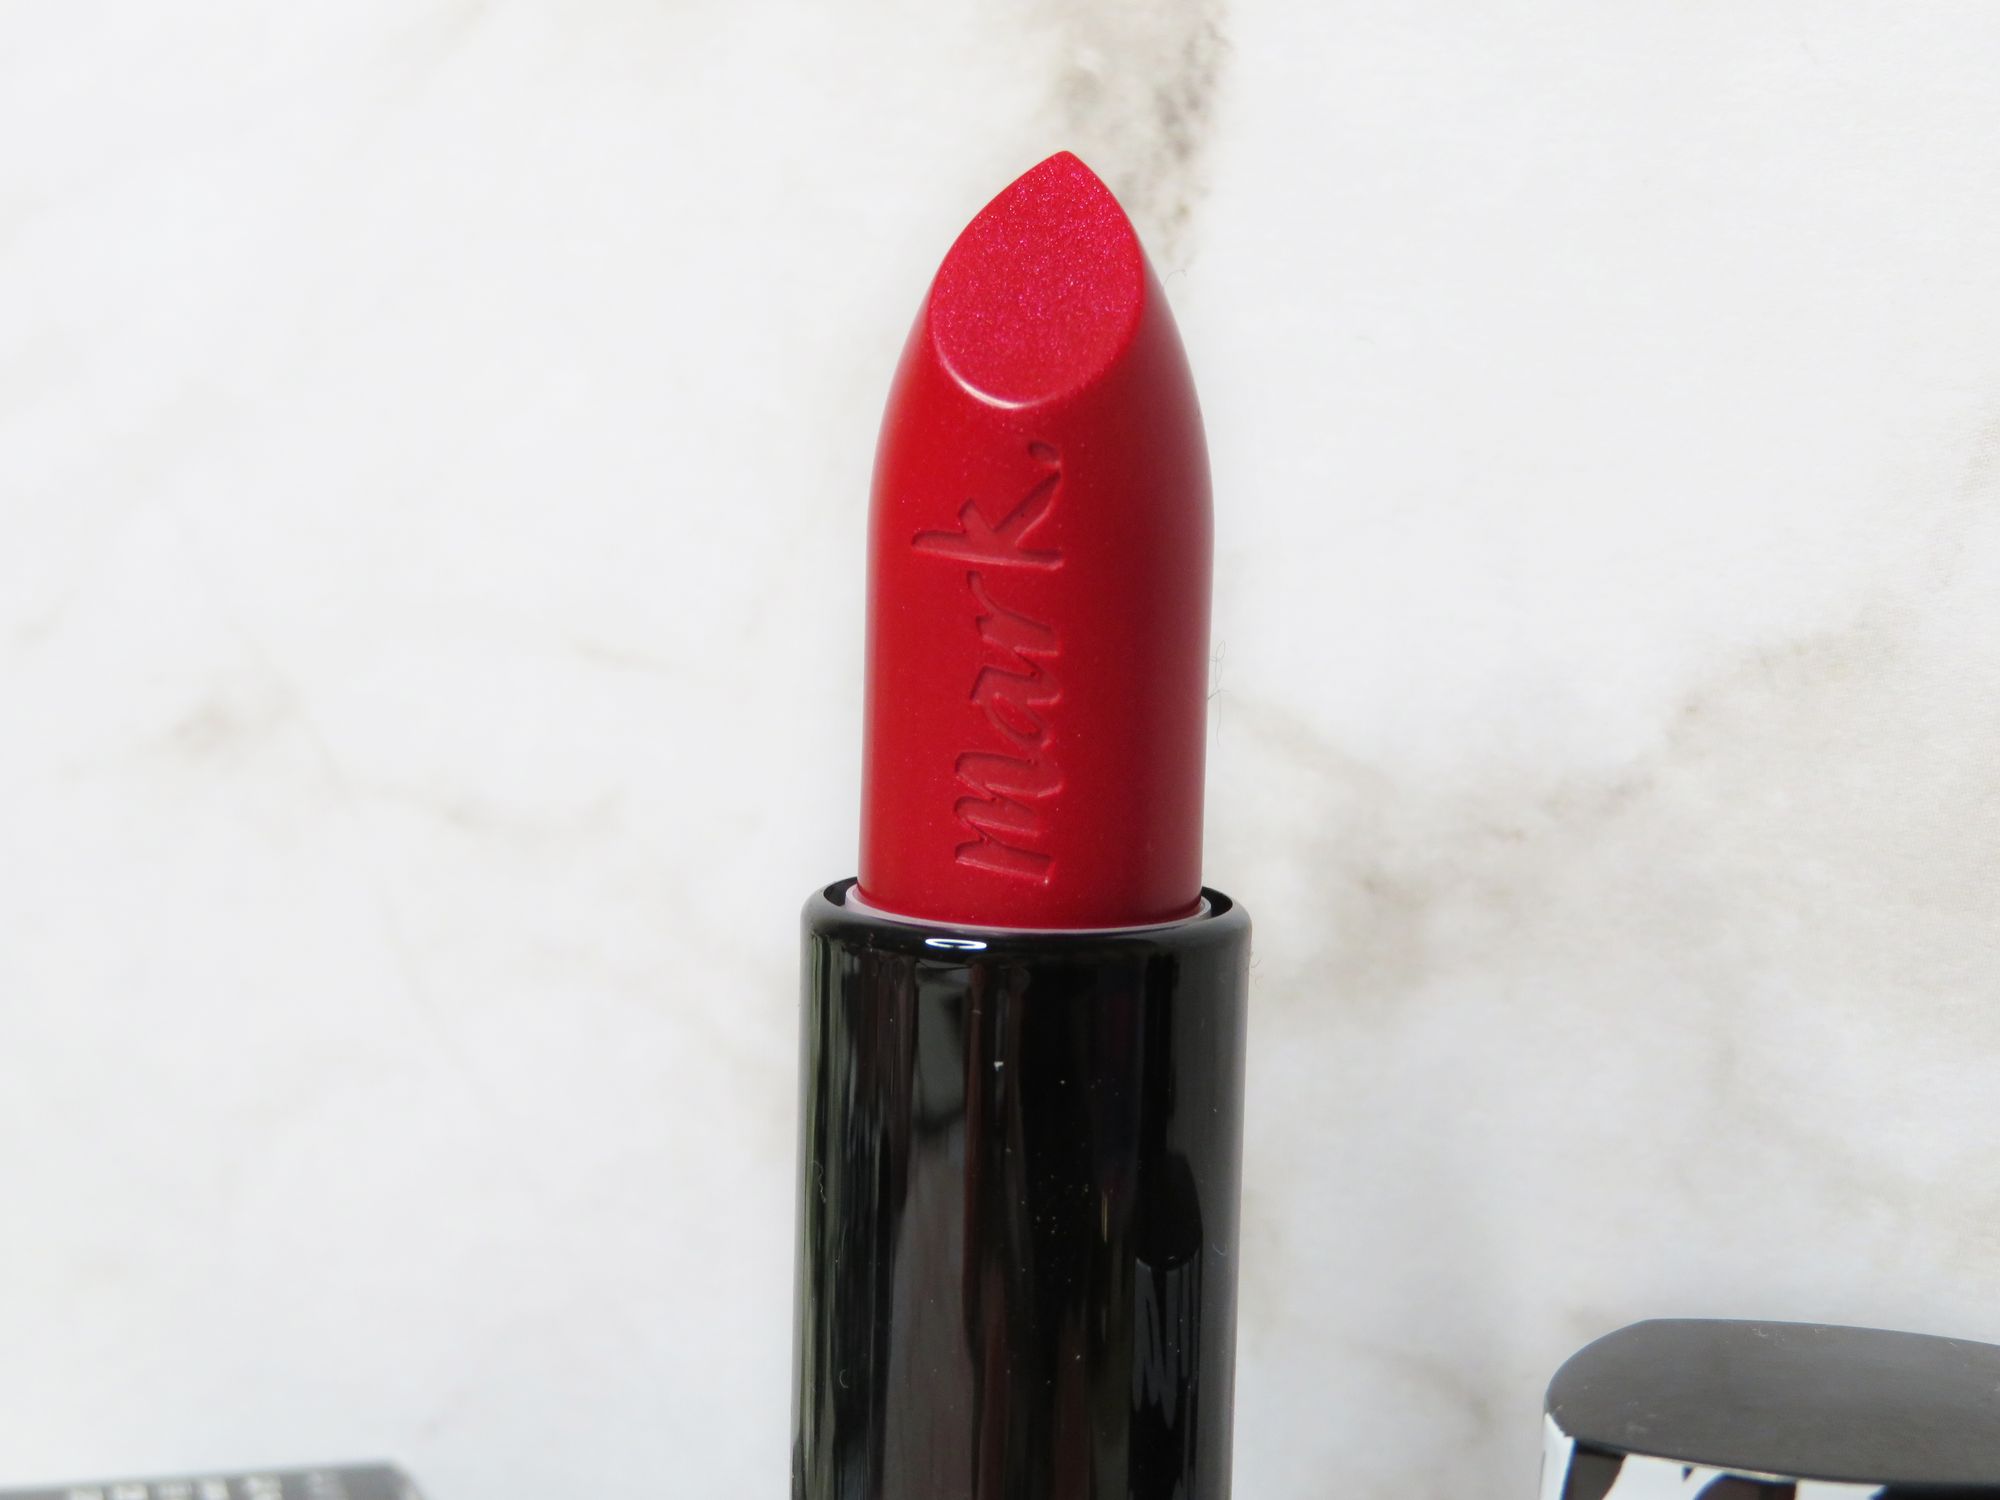 Berry Bold - Avon Mark Epic Lipsticks - Miss Boux